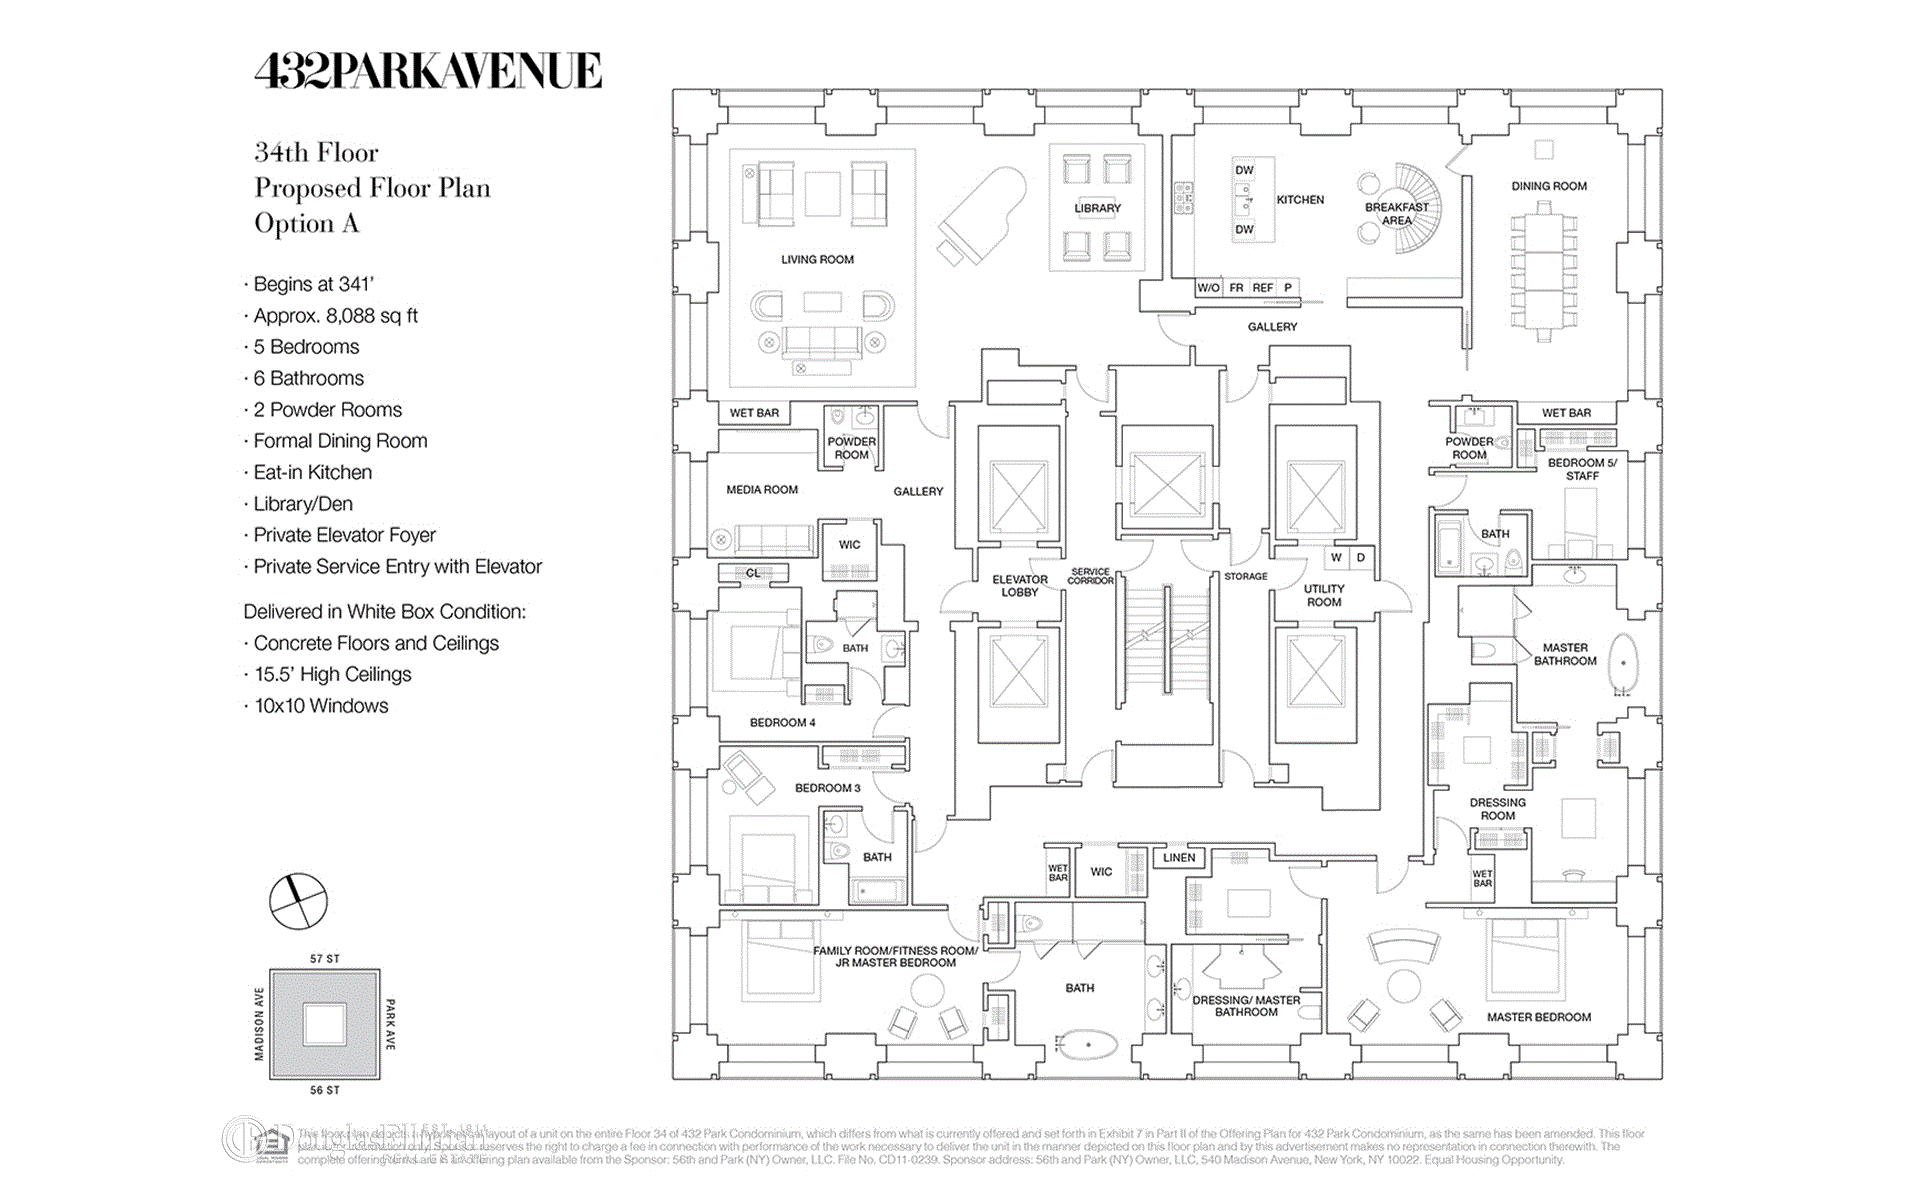 Rare opportunity to create a custom designed full floor residence at 432 Park Avenue.